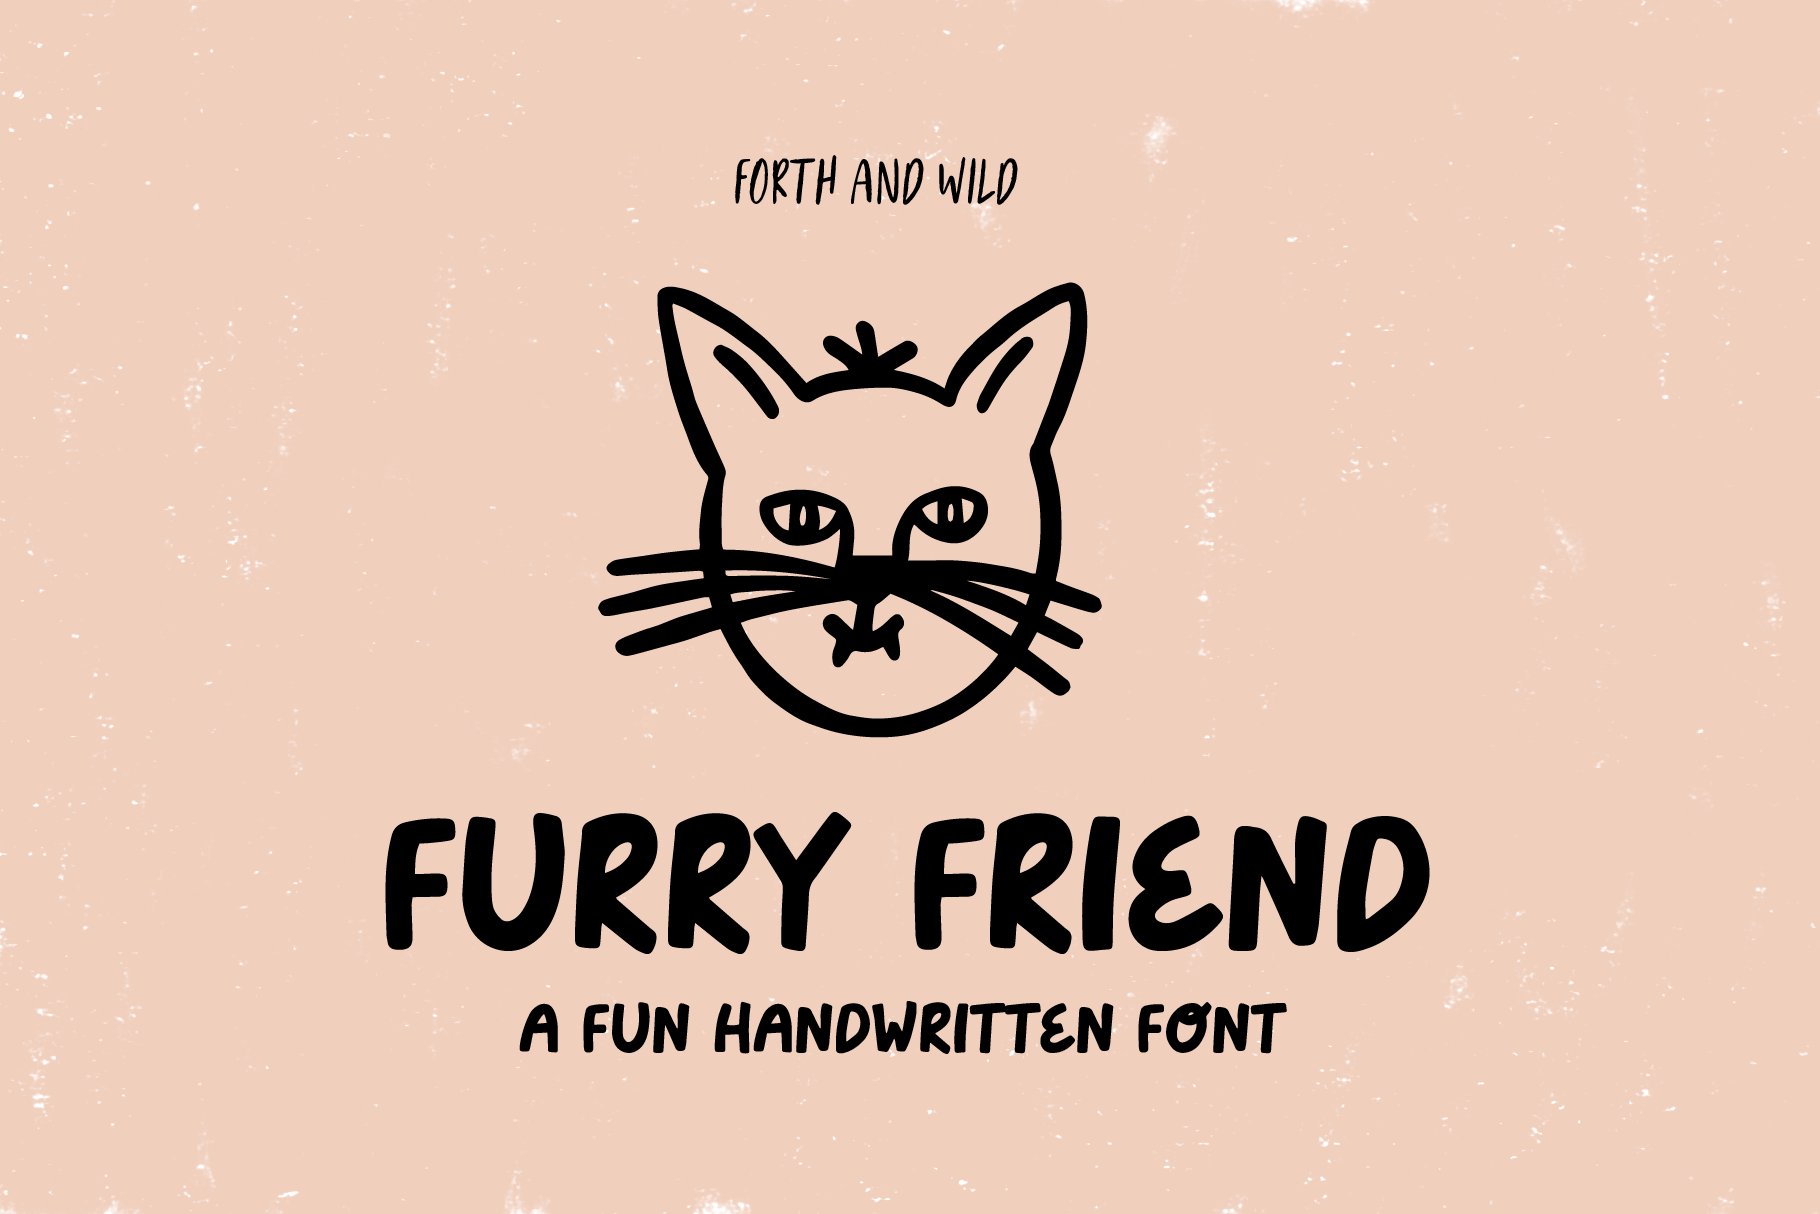 Furry Friend Handwritten Bold Font cover image.